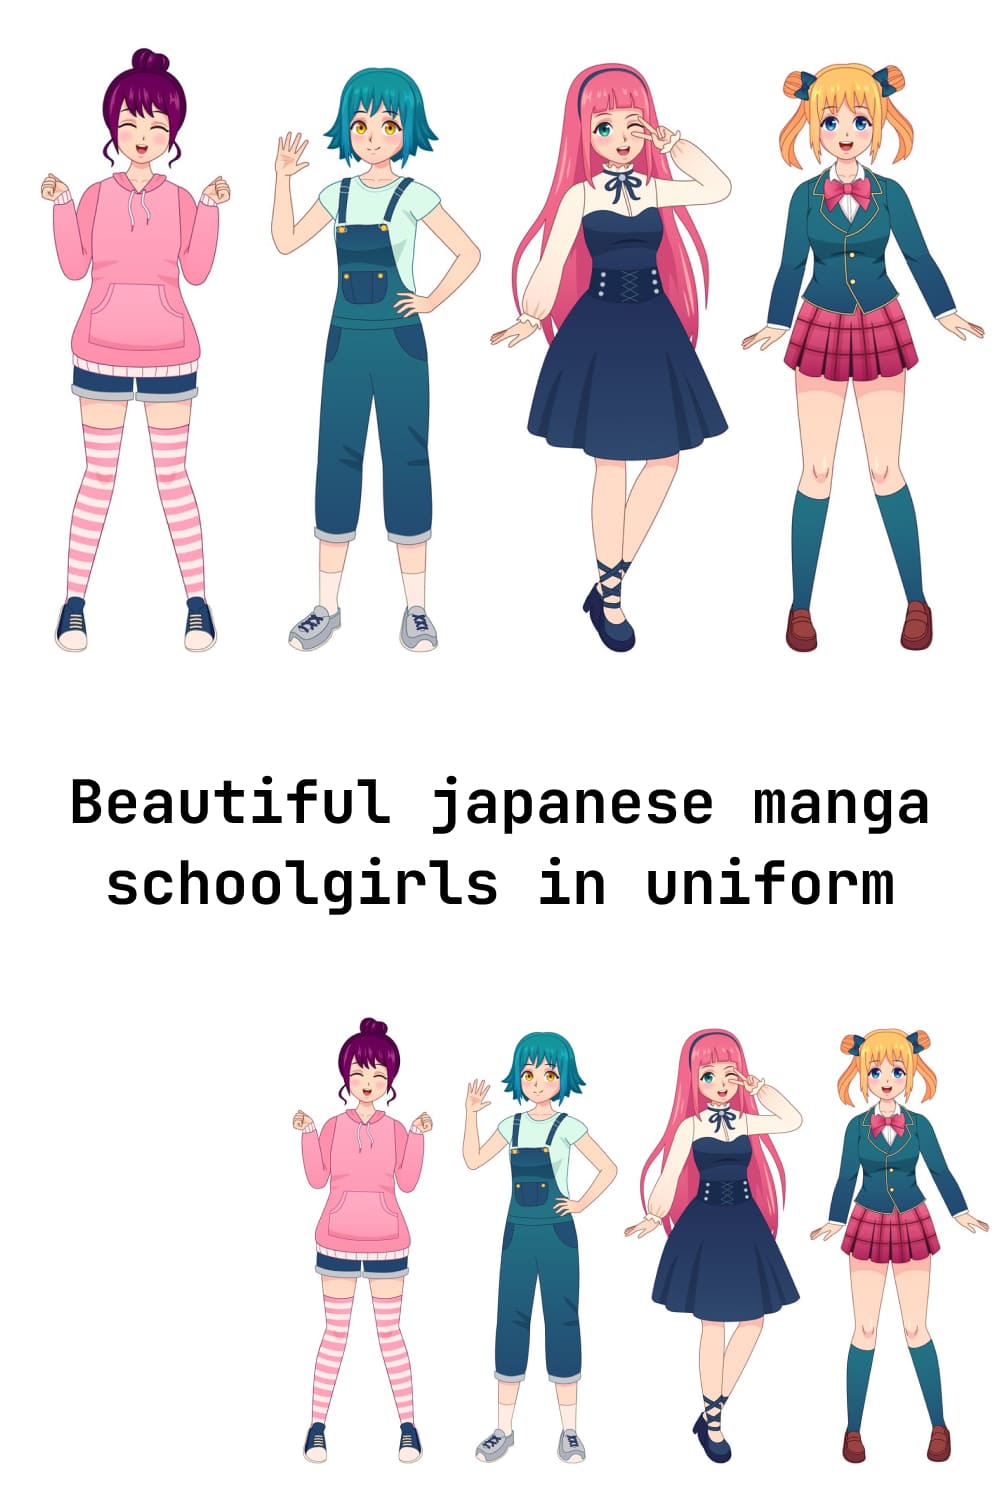 Anime Girls. Beautiful Japanese Manga Schoolgirls In Uniform - Pinterest.